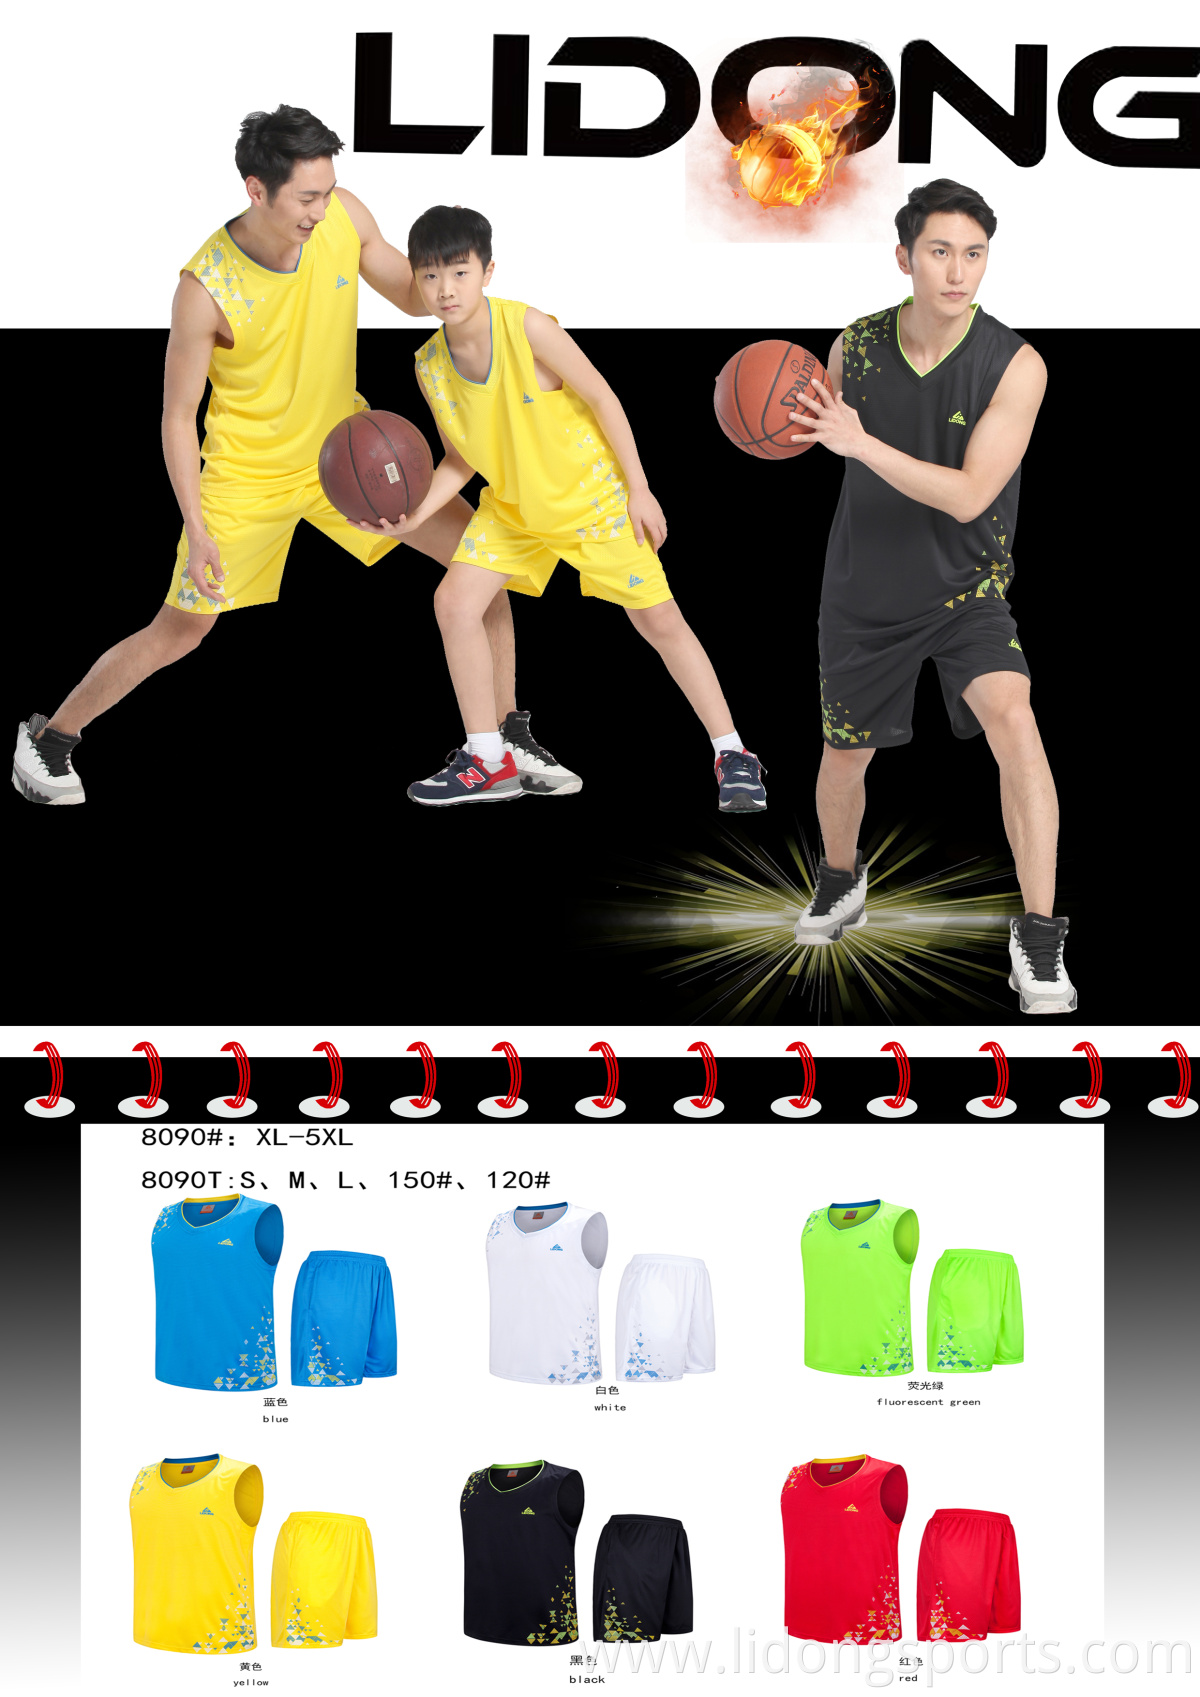 Mens' jersey basketball design 2021 new style basketball cloth cheap kids basketball jerseys